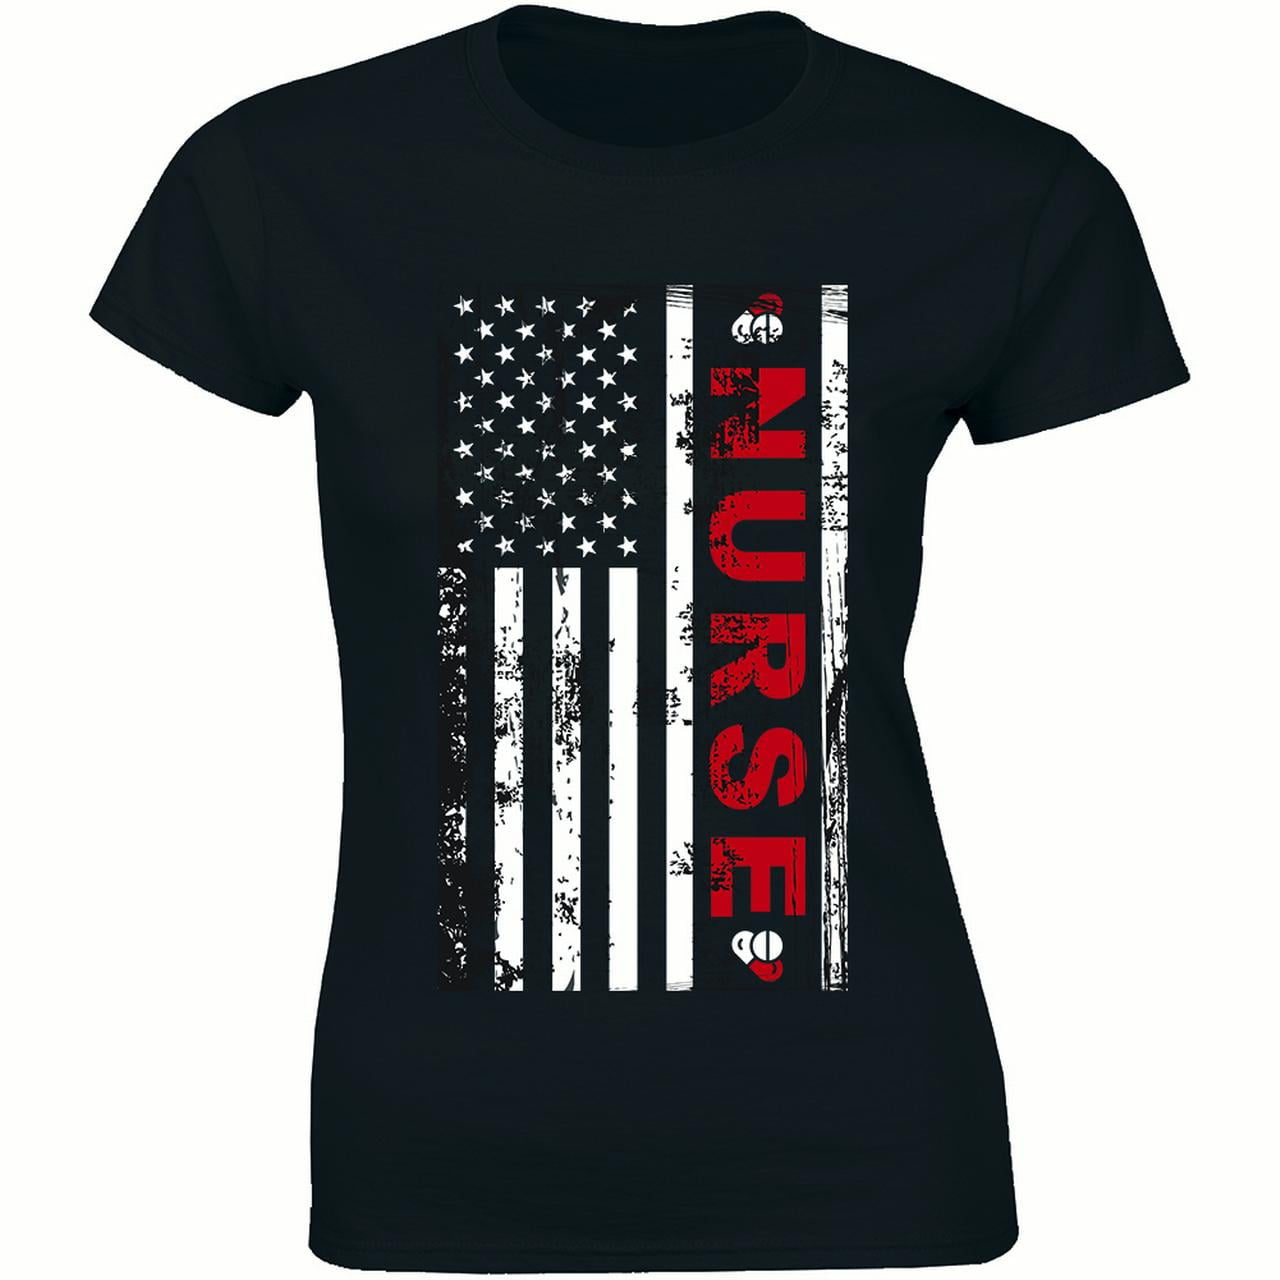 4th of July Shirt Patriot Gift Nurse T-Shirt,USA Flag Shirt Flag Shirt Patriotic t shirts American Nurse Patriotic shirt Nursing